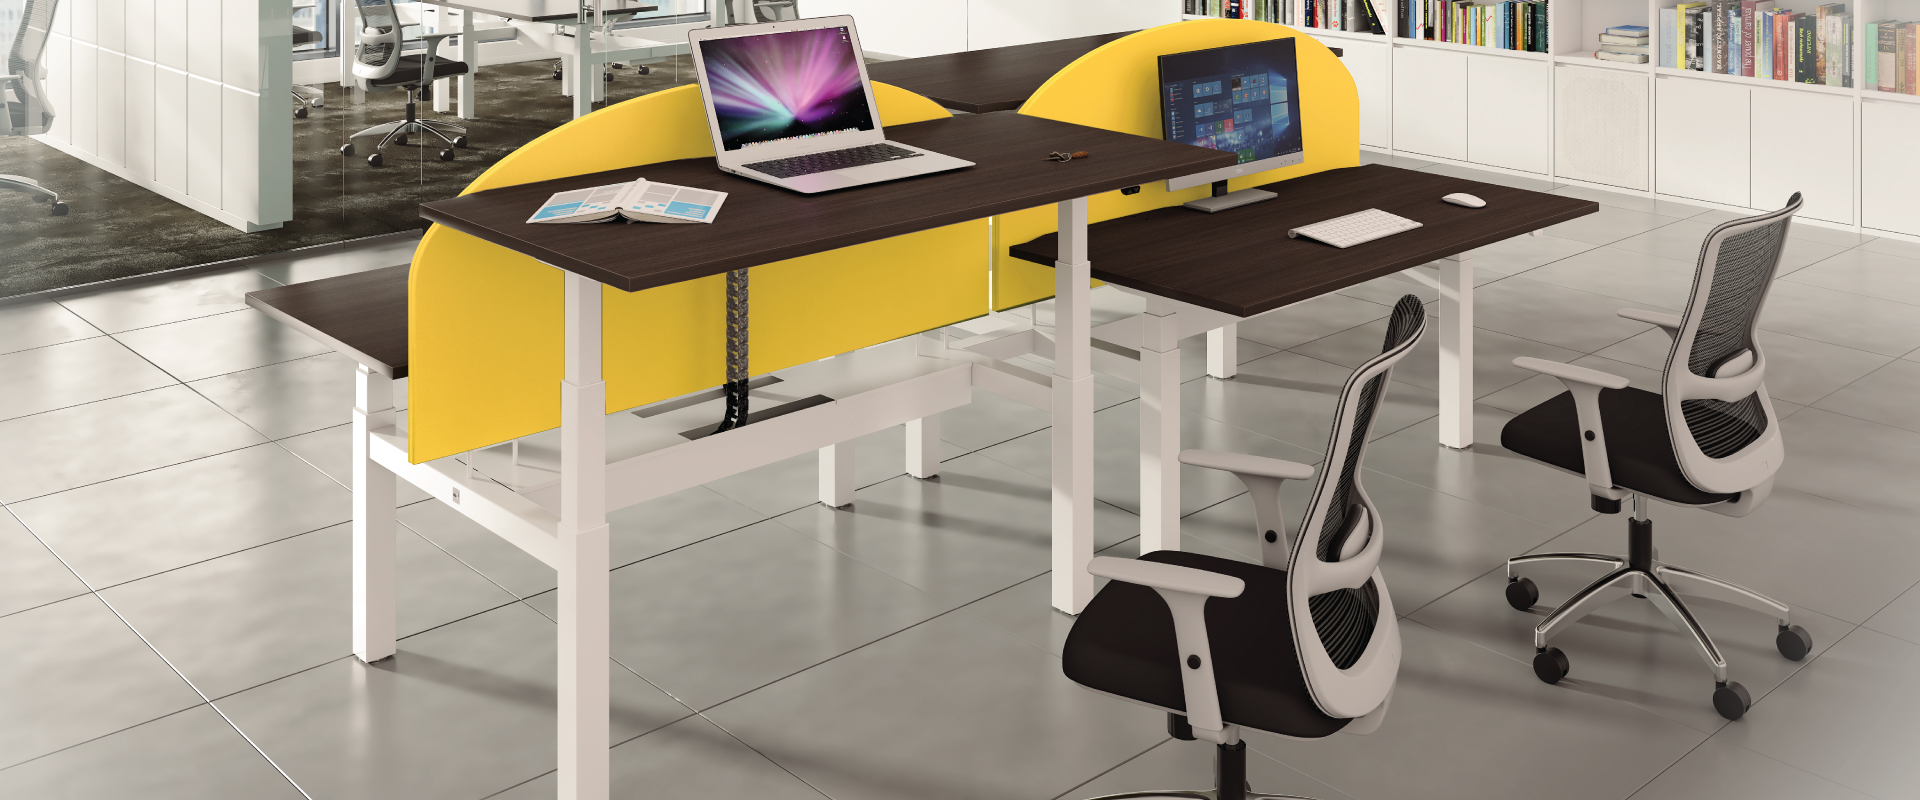 Employee fitness: height adjustable desks - Elev8